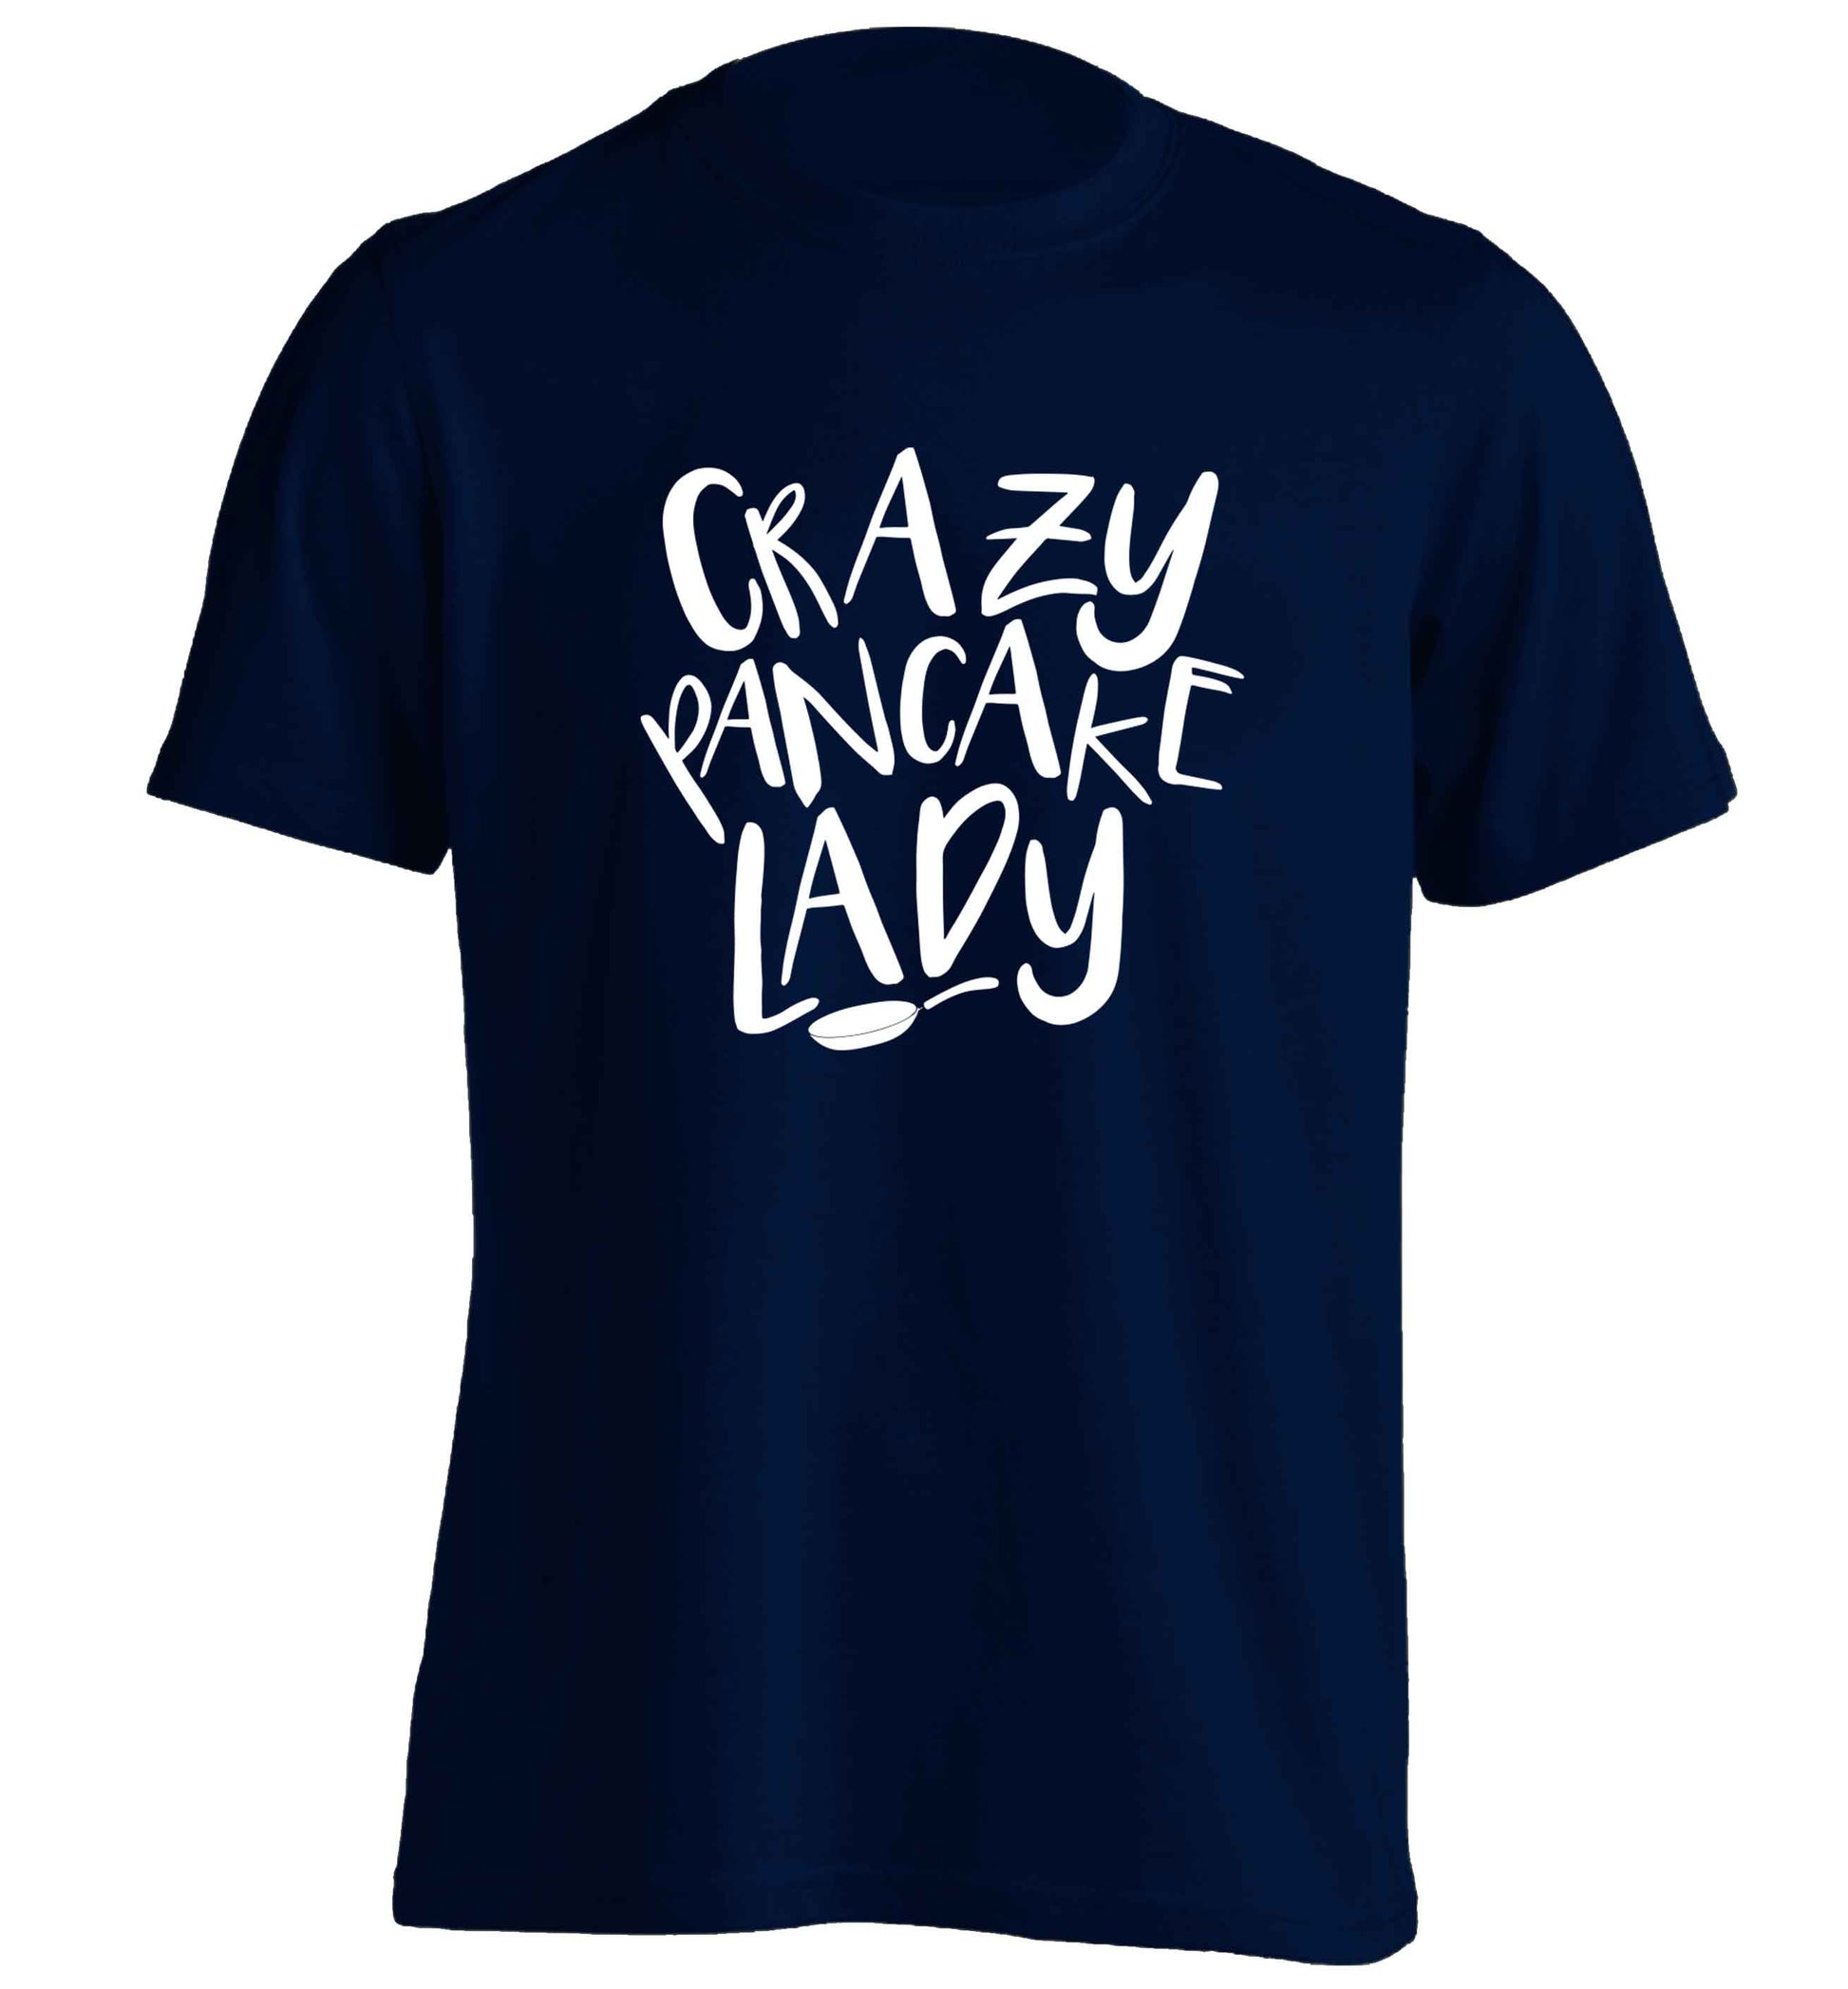 Crazy pancake lady adults unisex navy Tshirt 2XL